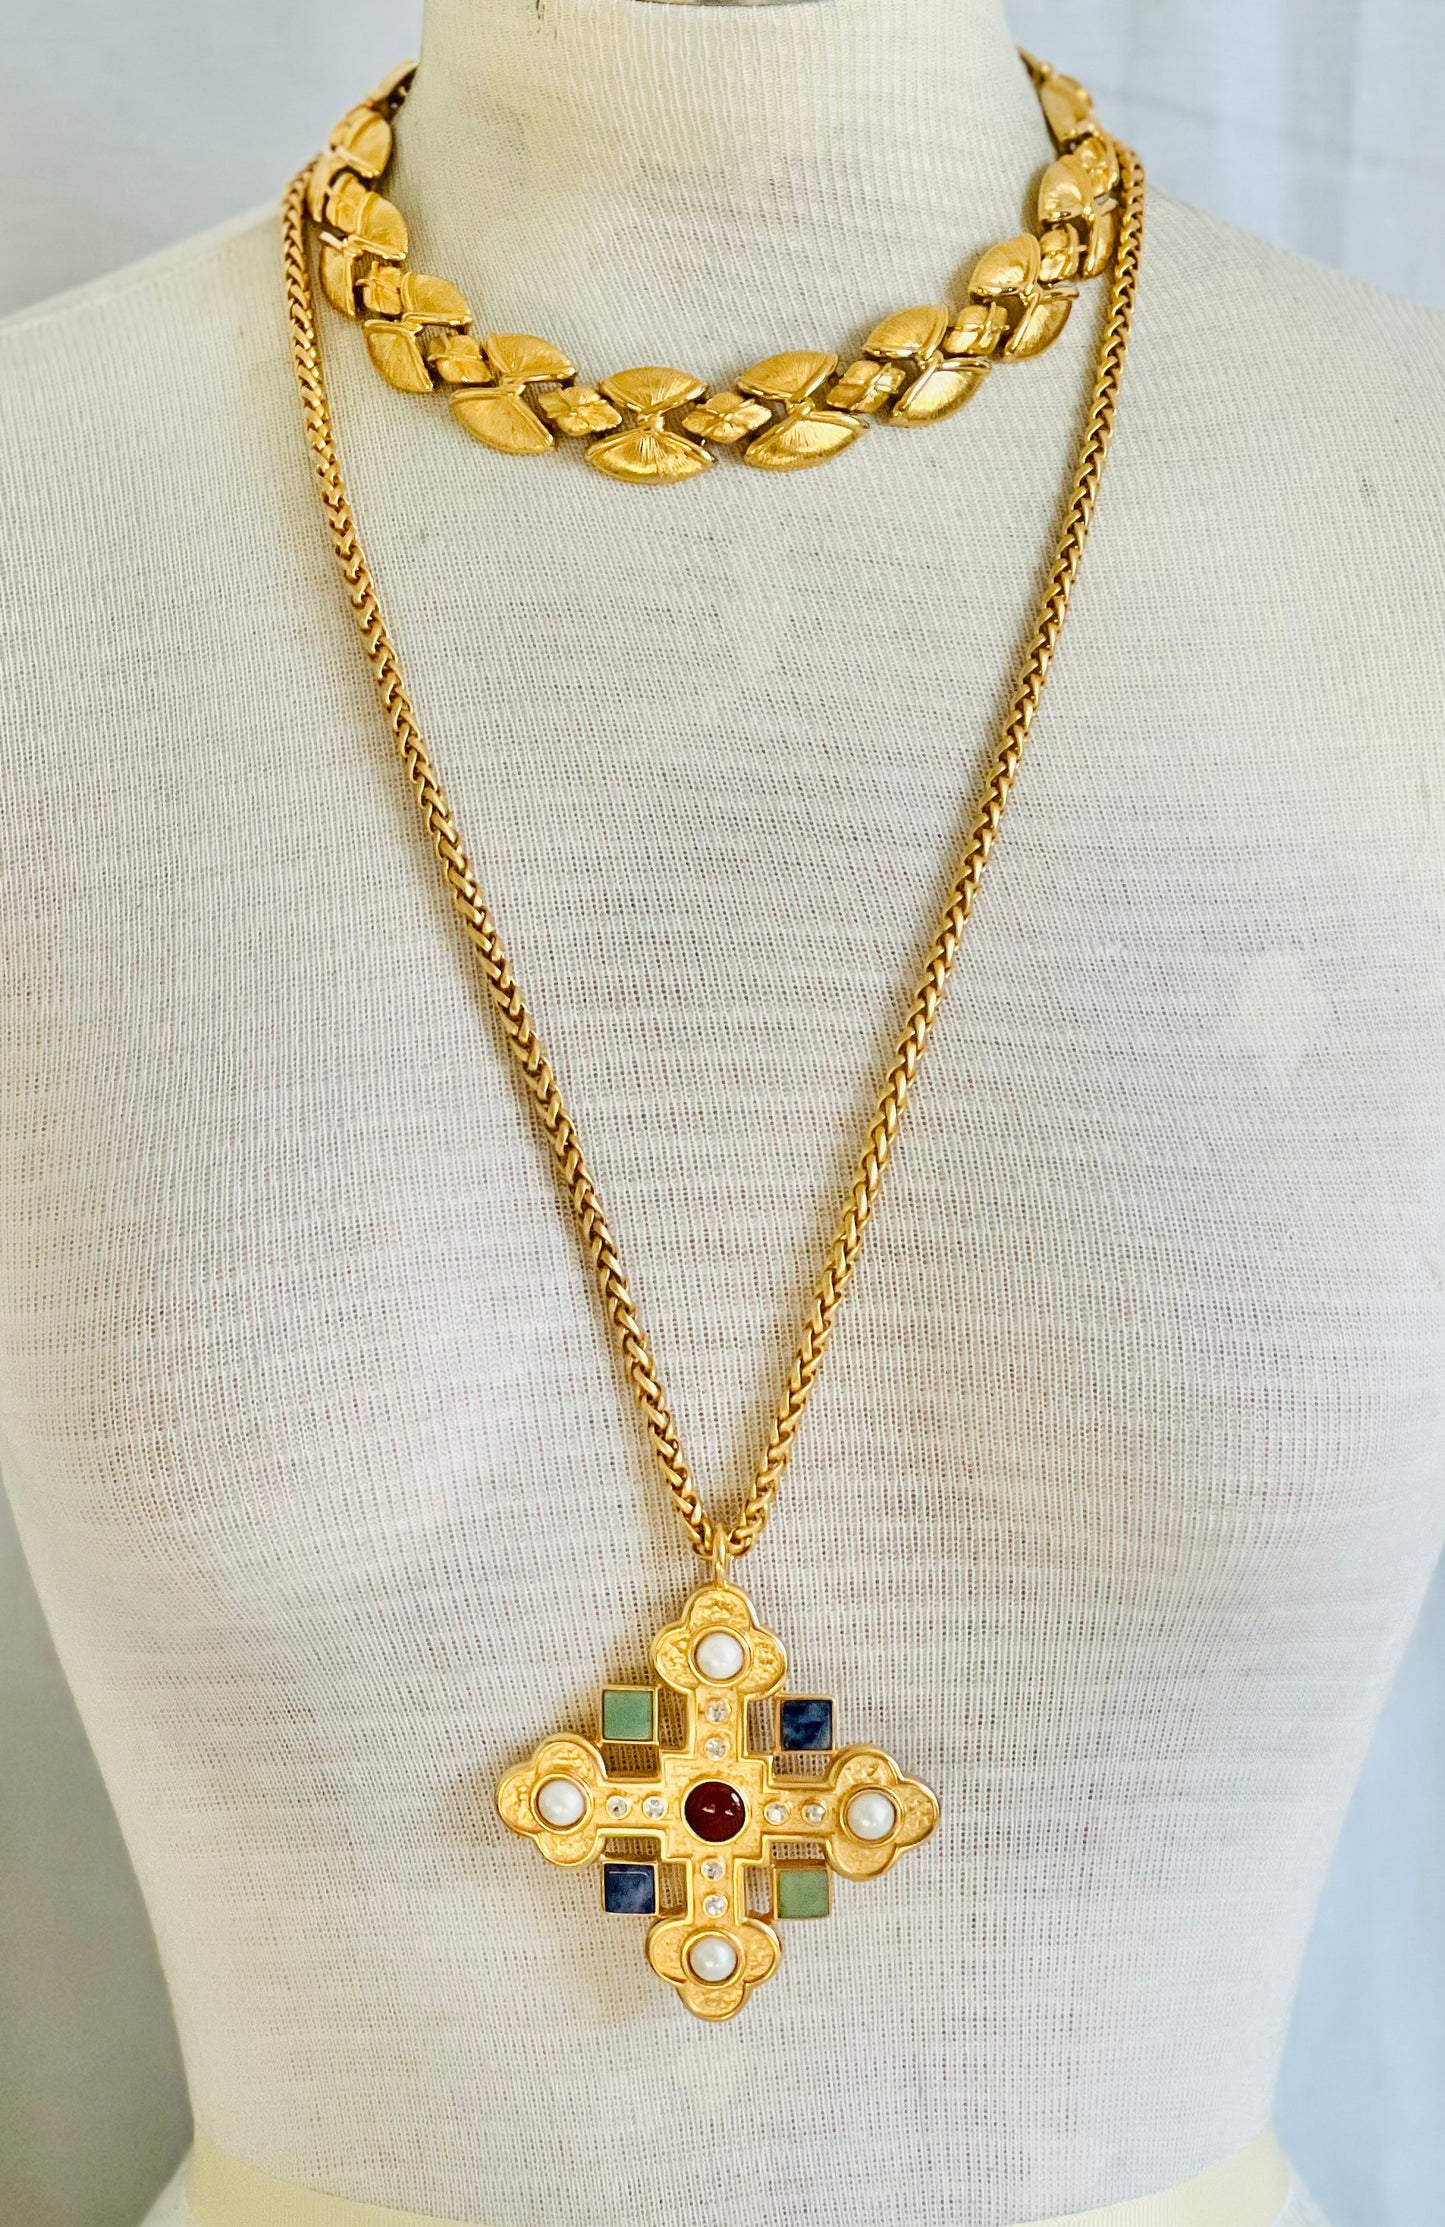 Vintage 1980s Napier Bow Pattern Gold Necklace